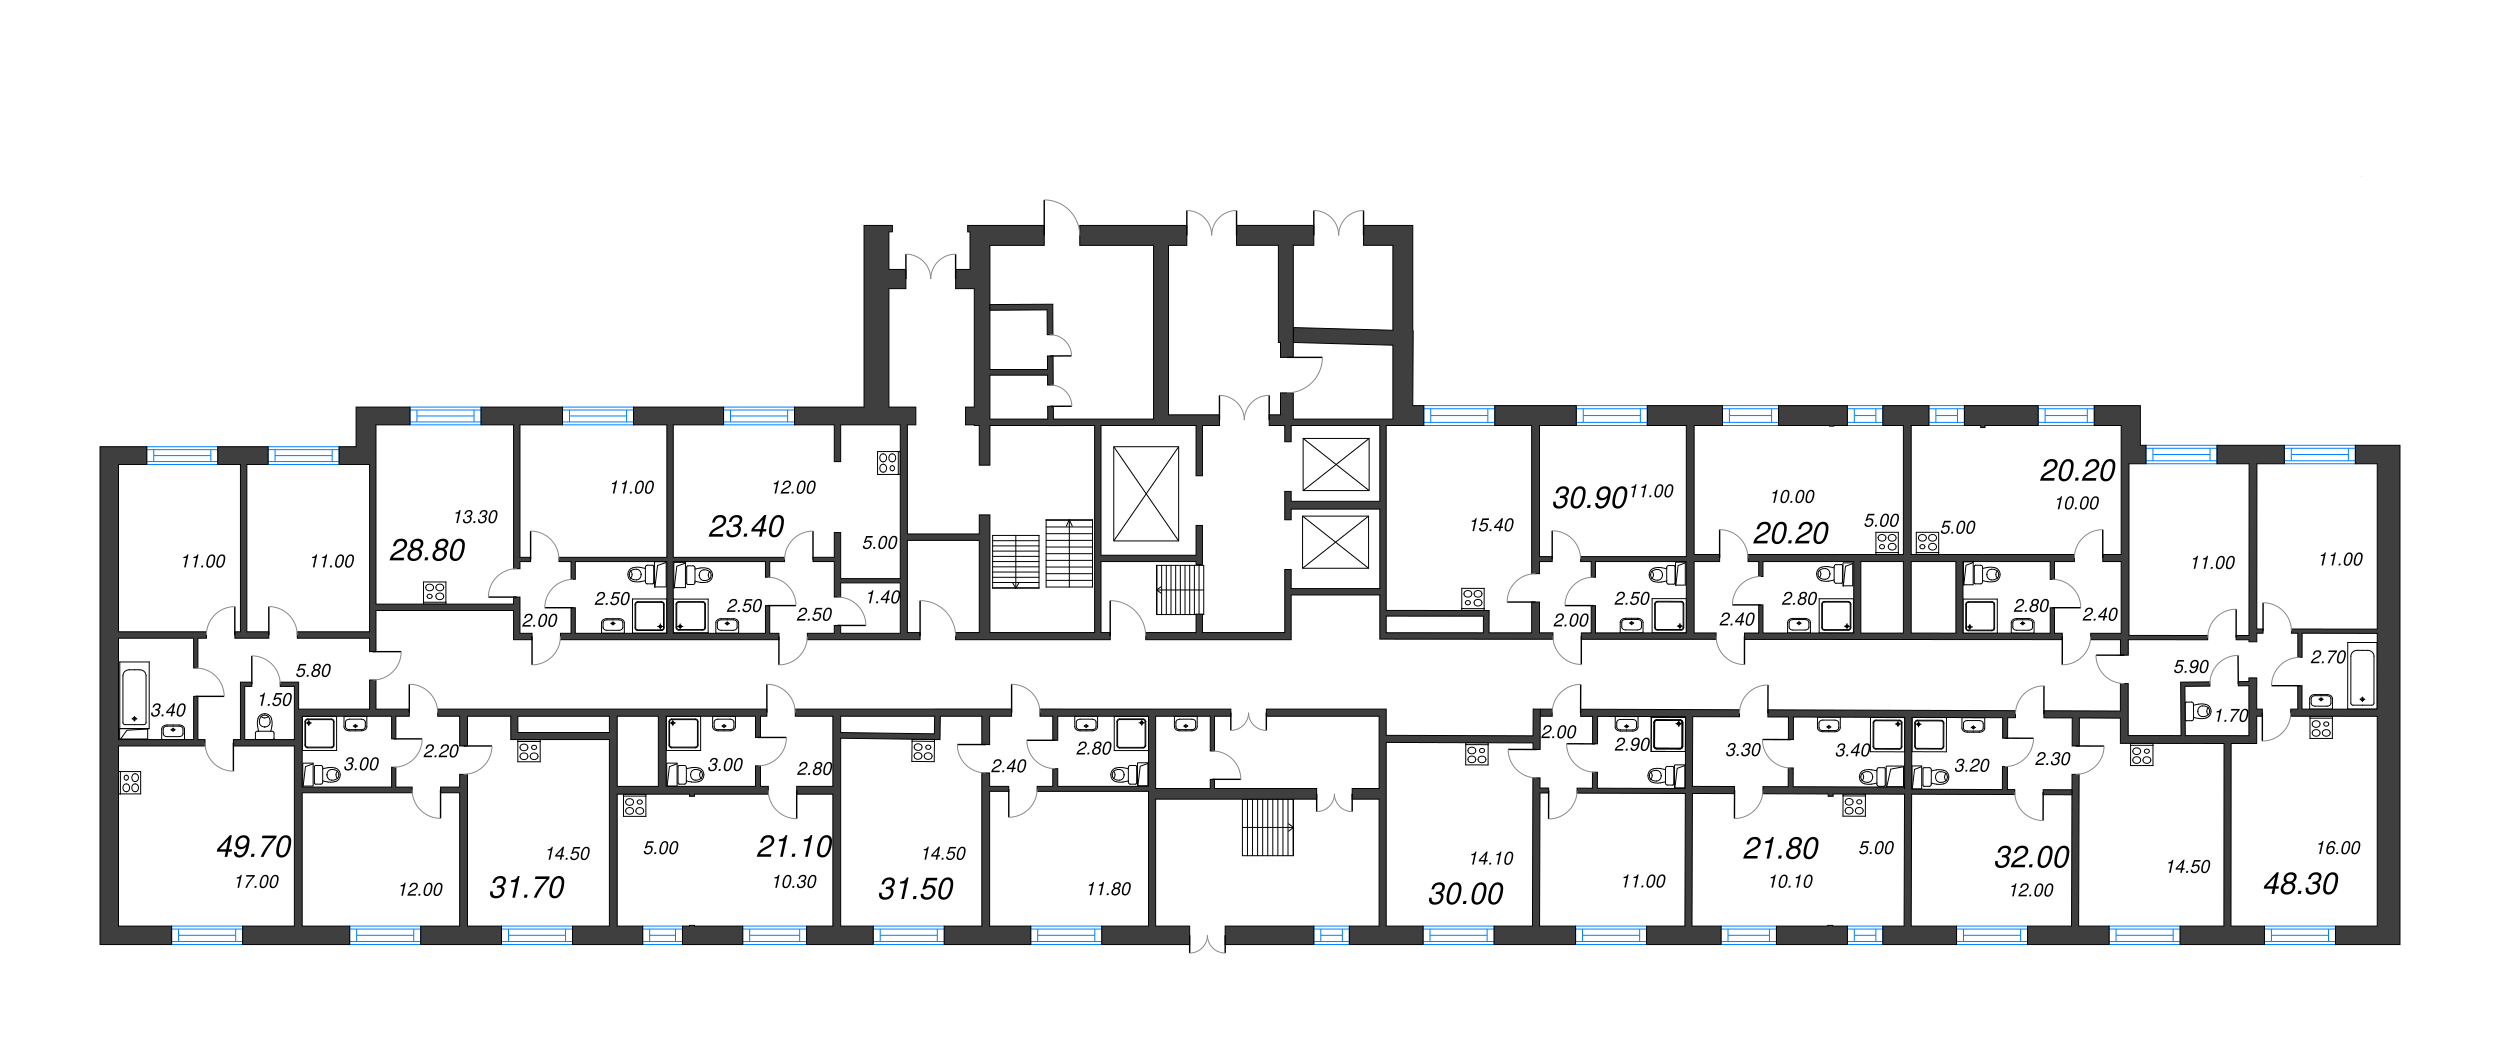 3-комнатная (Евро) квартира, 48.3 м² - планировка этажа